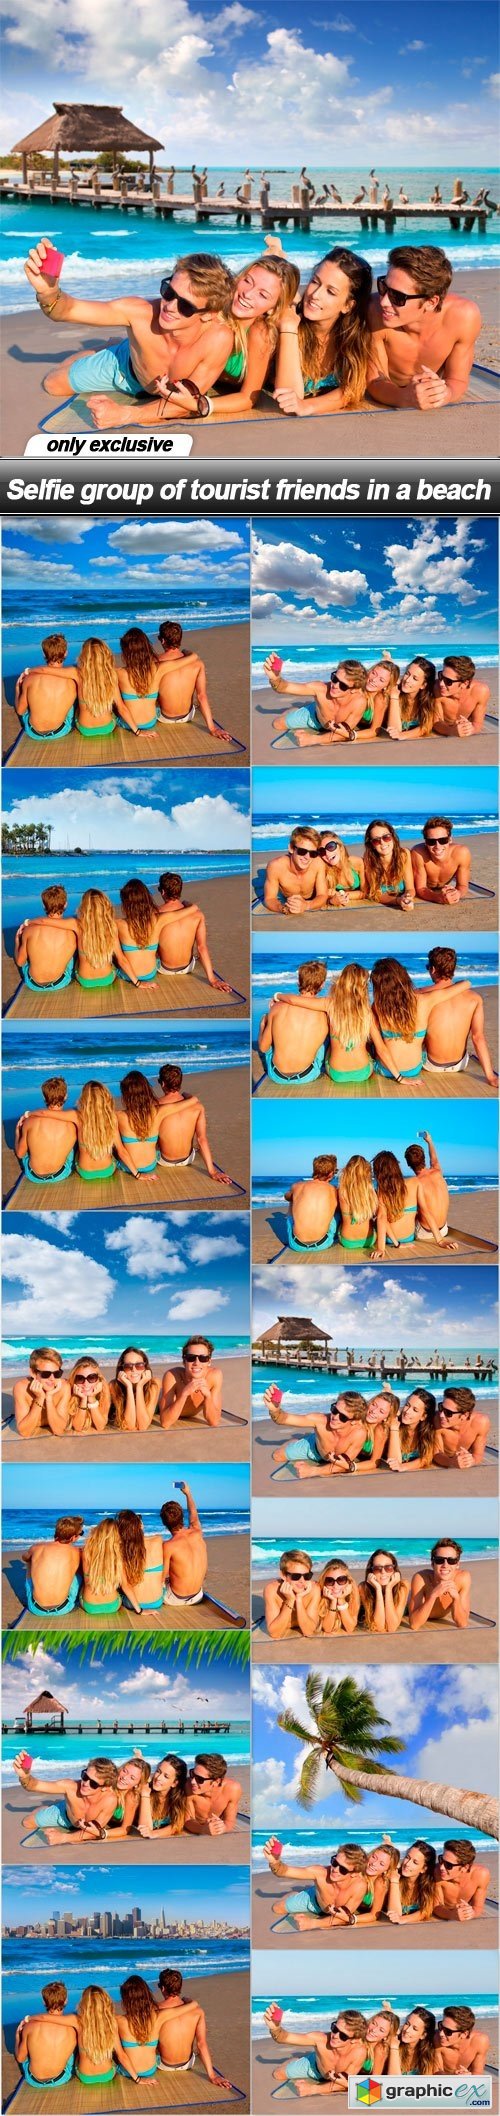 Selfie group of tourist friends in a beach - 15 UHQ JPEG